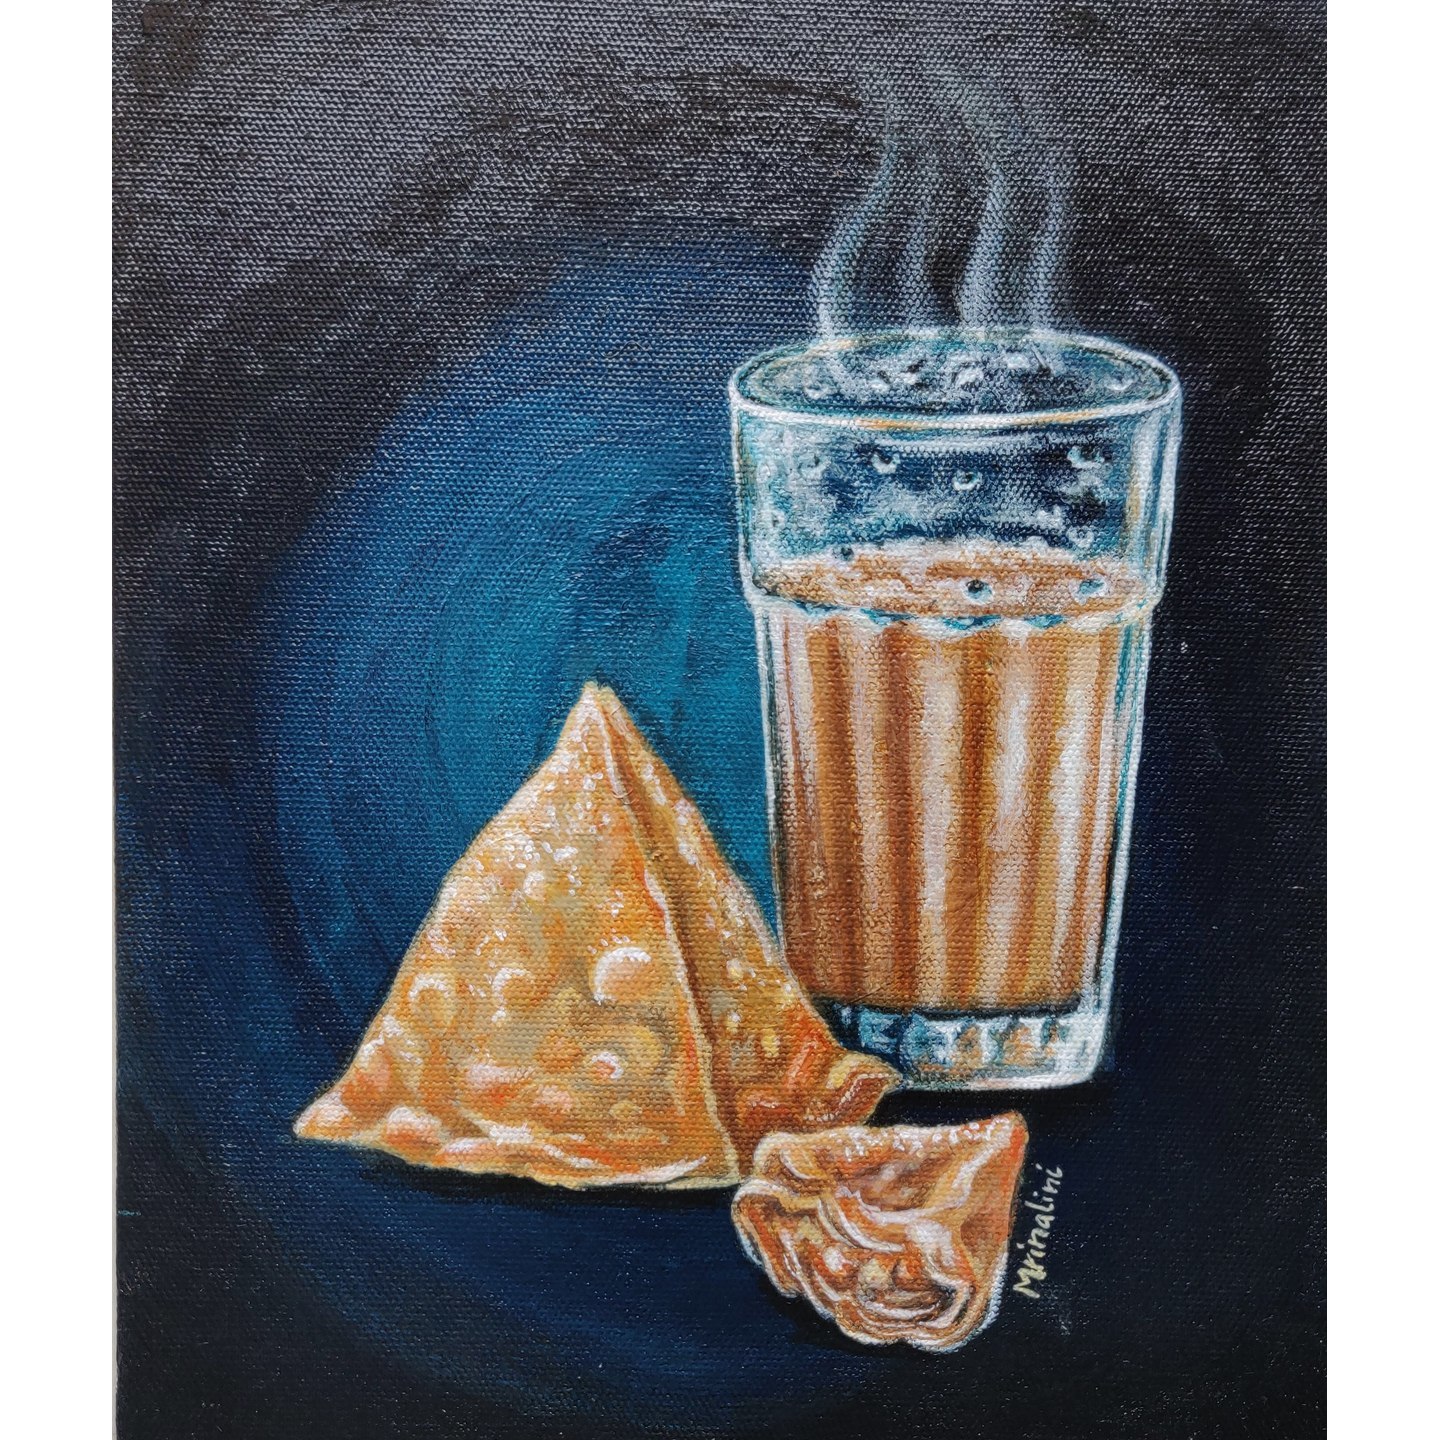 India special samosa chai acrylic painting on canvas